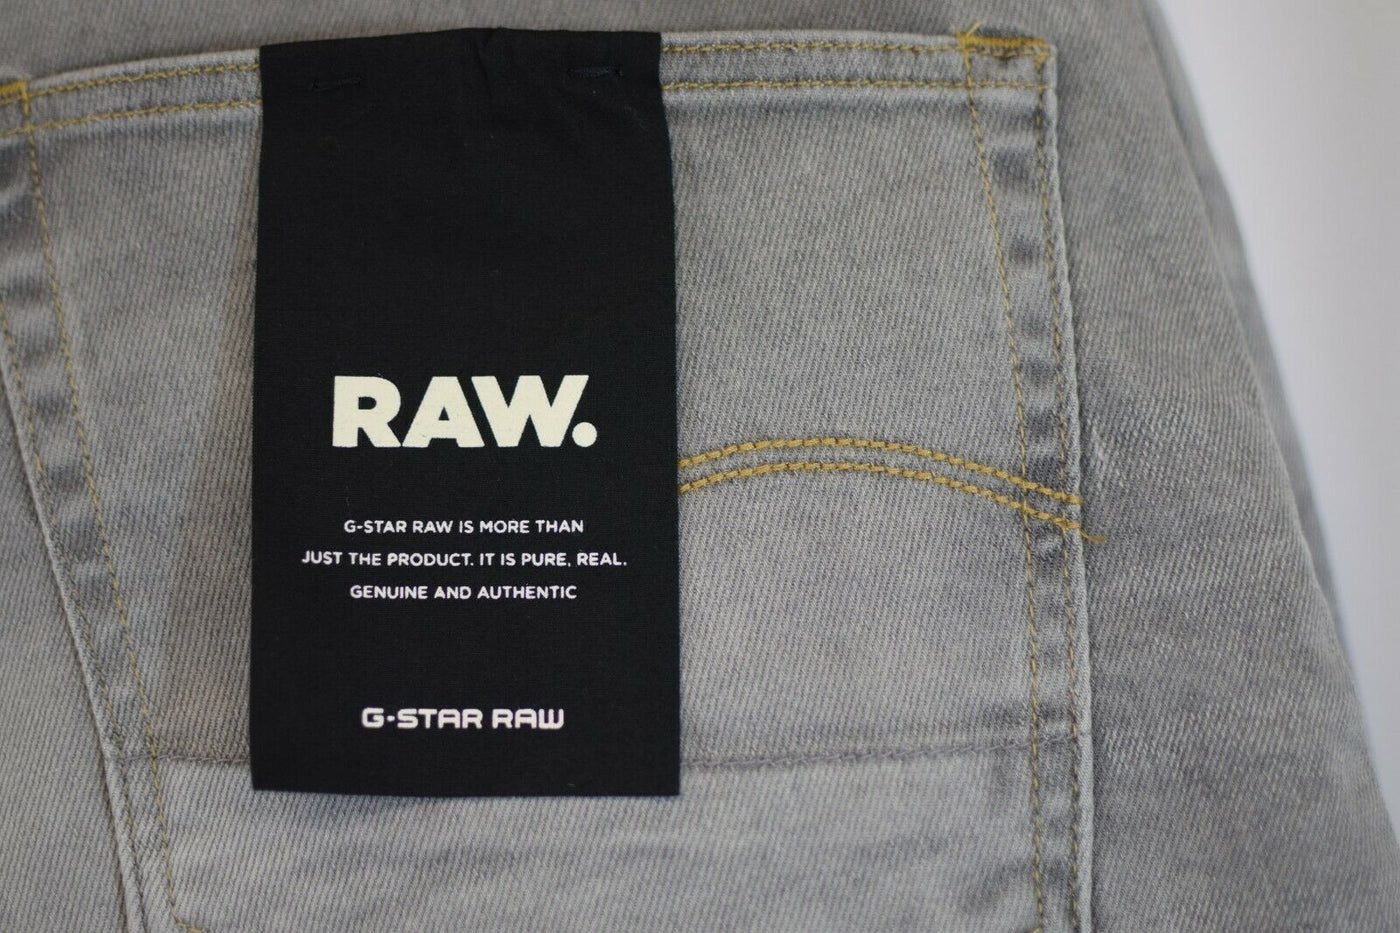 G-Star RAW Men's 3301 Straight Light Aged Grey Denim Shorts (Retail $120)